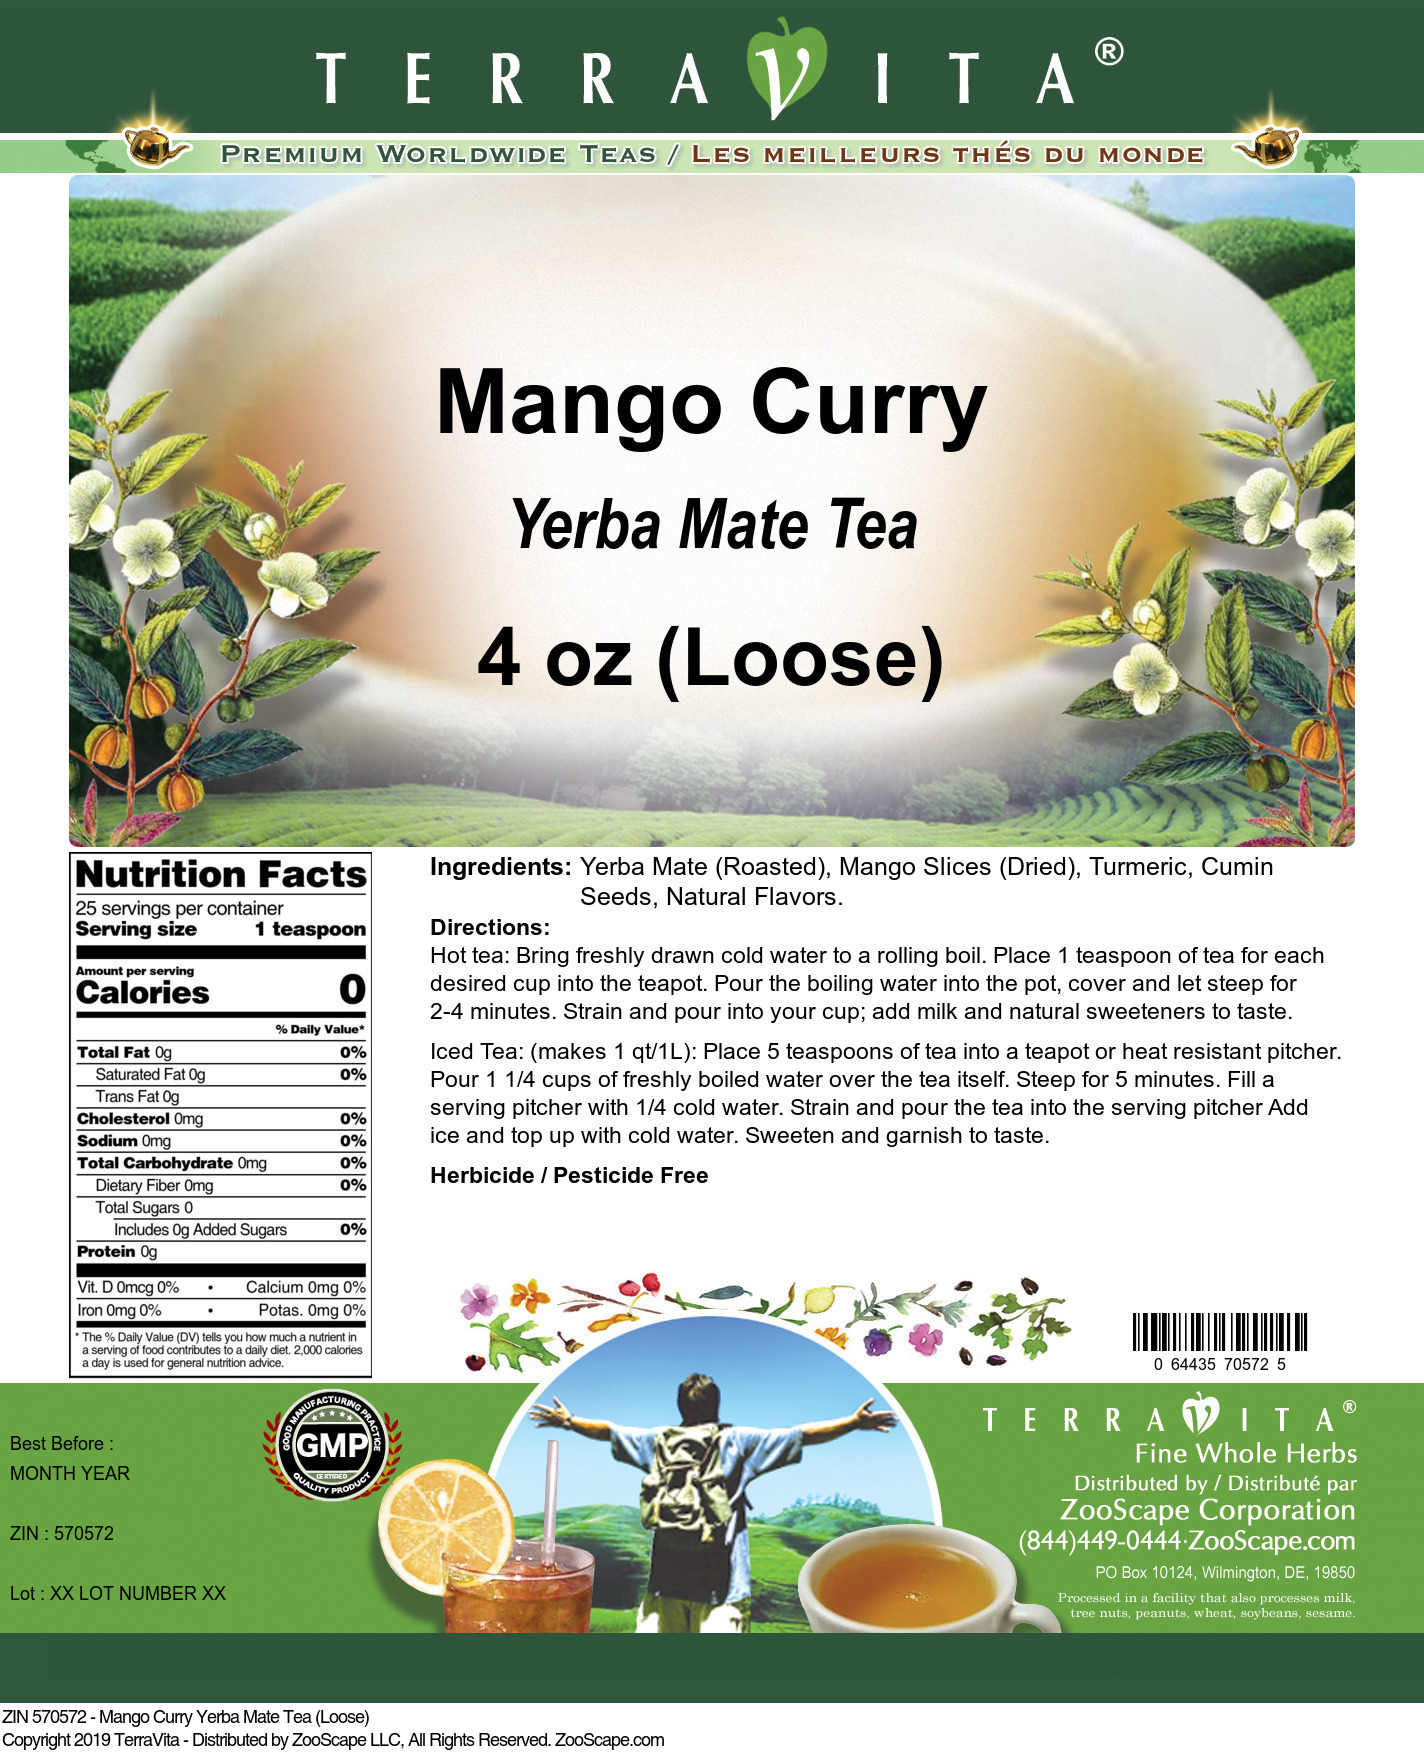 Mango Curry Yerba Mate Tea (Loose) - Label